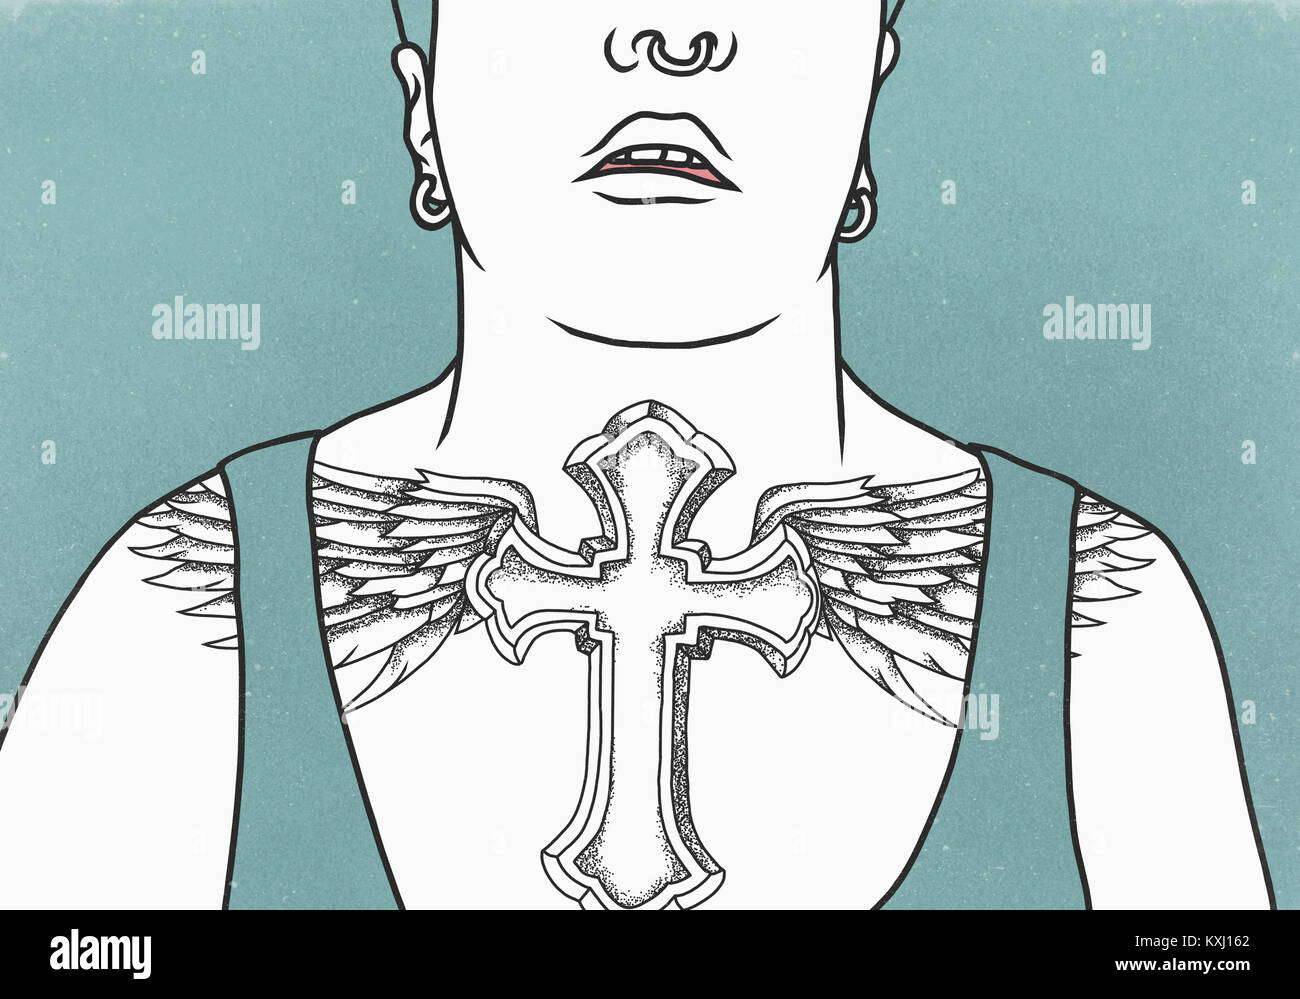 cross chest tattoos